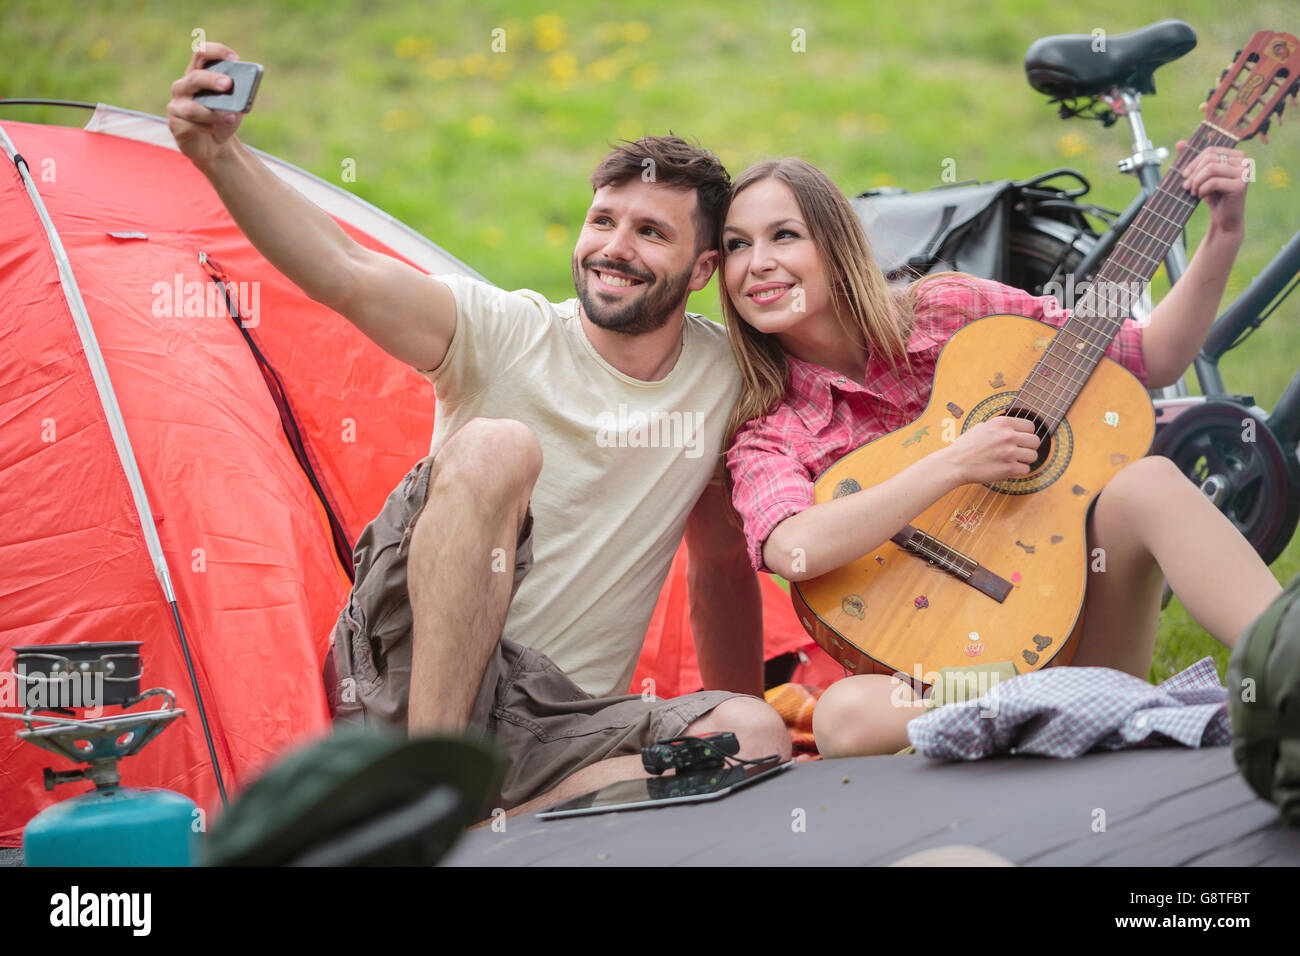 Pareja joven en camping tomando selfie Foto de stock